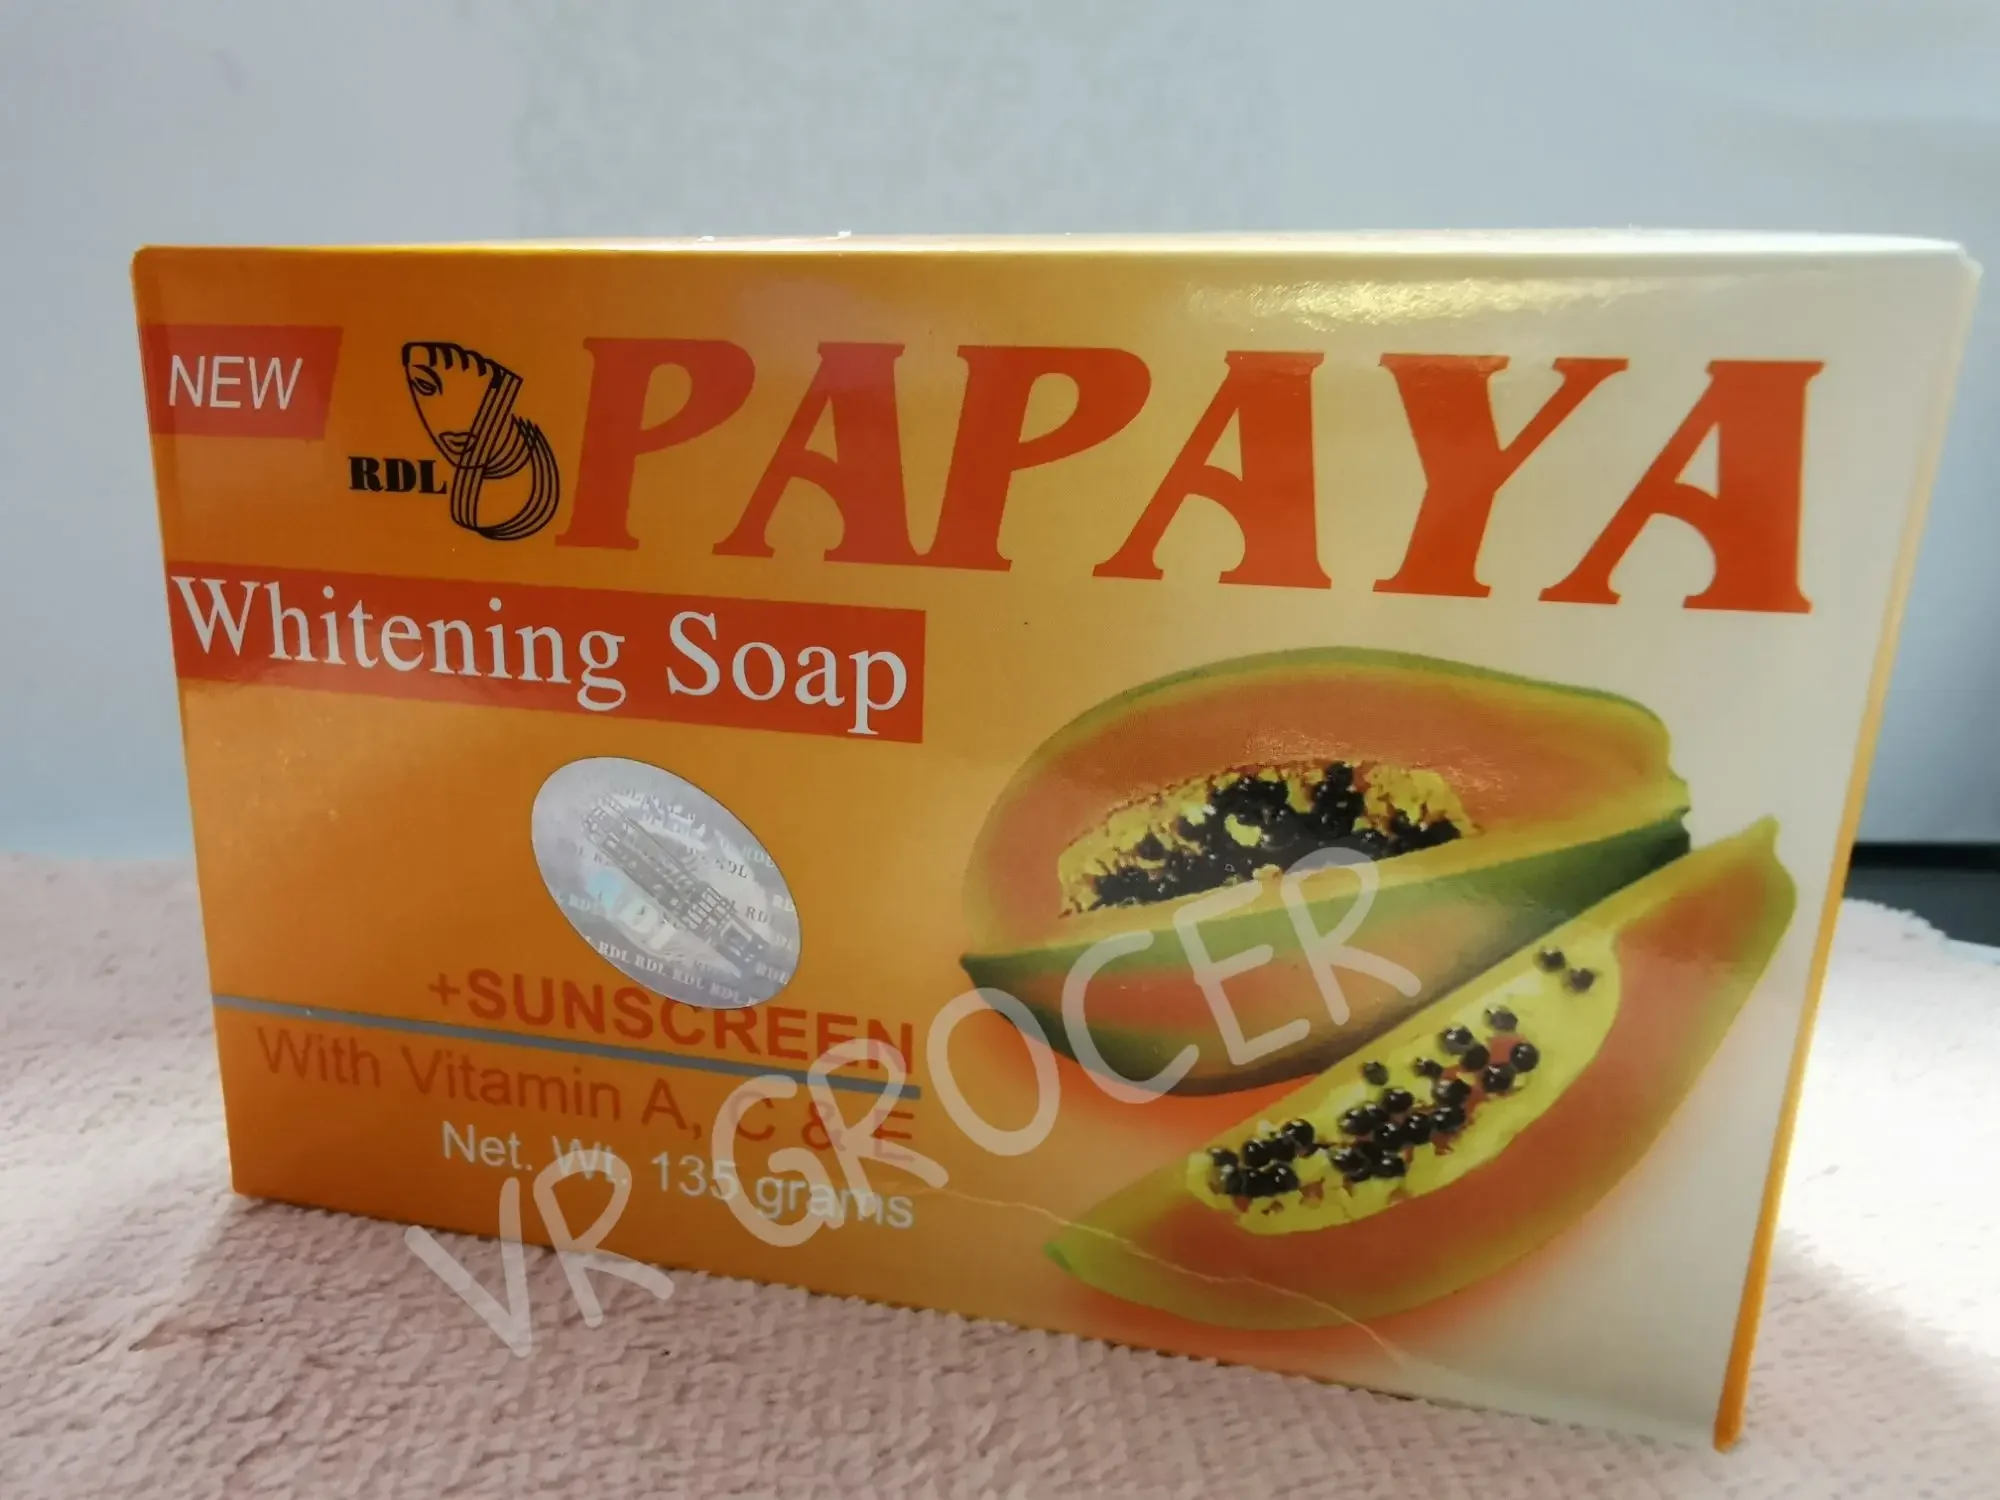 💯ORIGINAL RDL SABUN PAPAYA WHITENING SOAP 135g